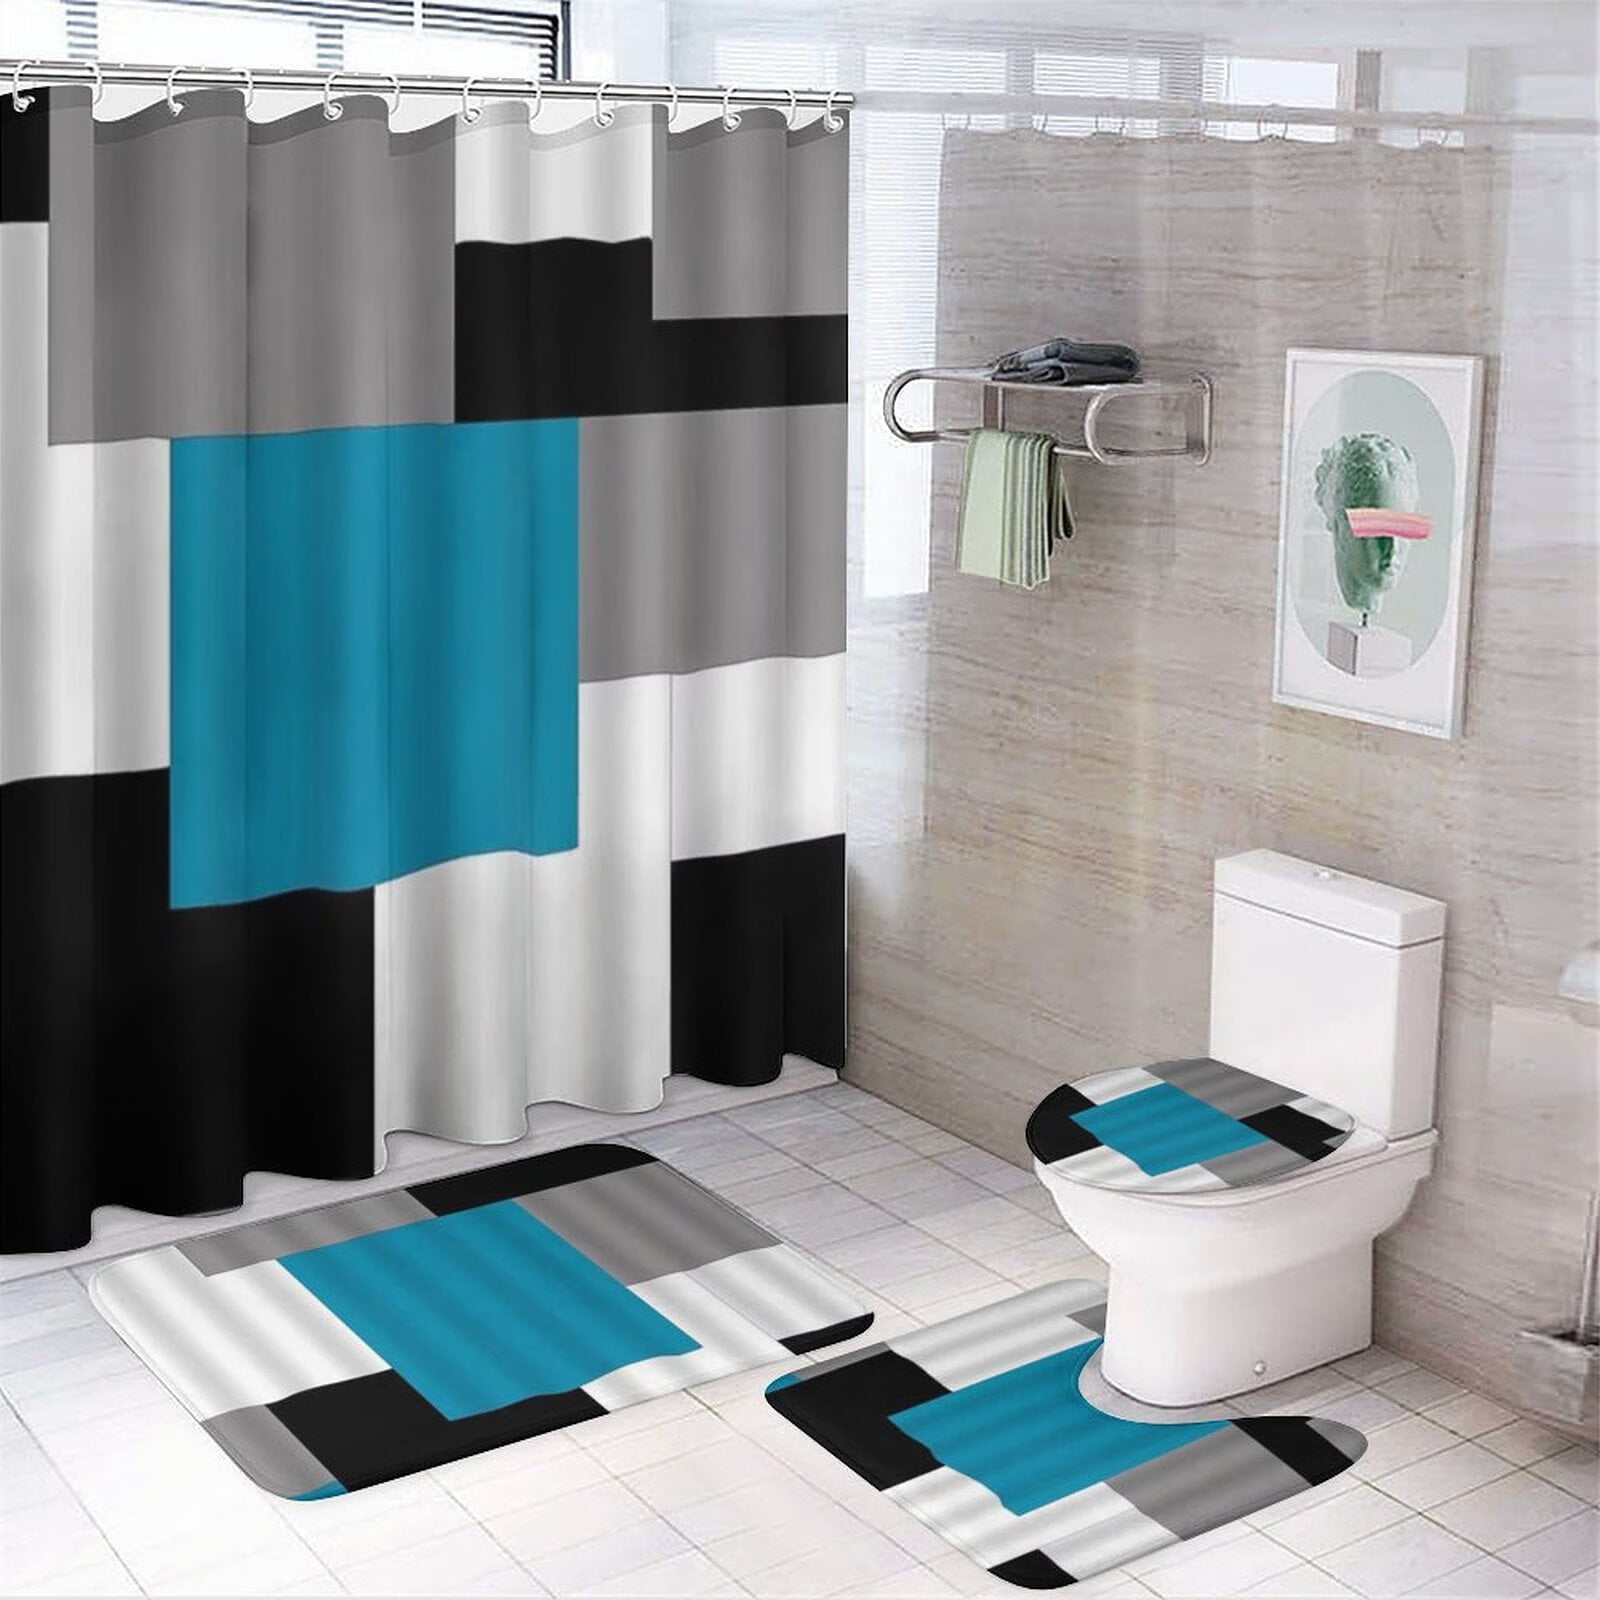  VEGA U Hexagon Fabric Shower Curtain for Bathroom 72x72 Inch  (Black) Shower Head Filter Aluminum Alloy Shell : Home & Kitchen